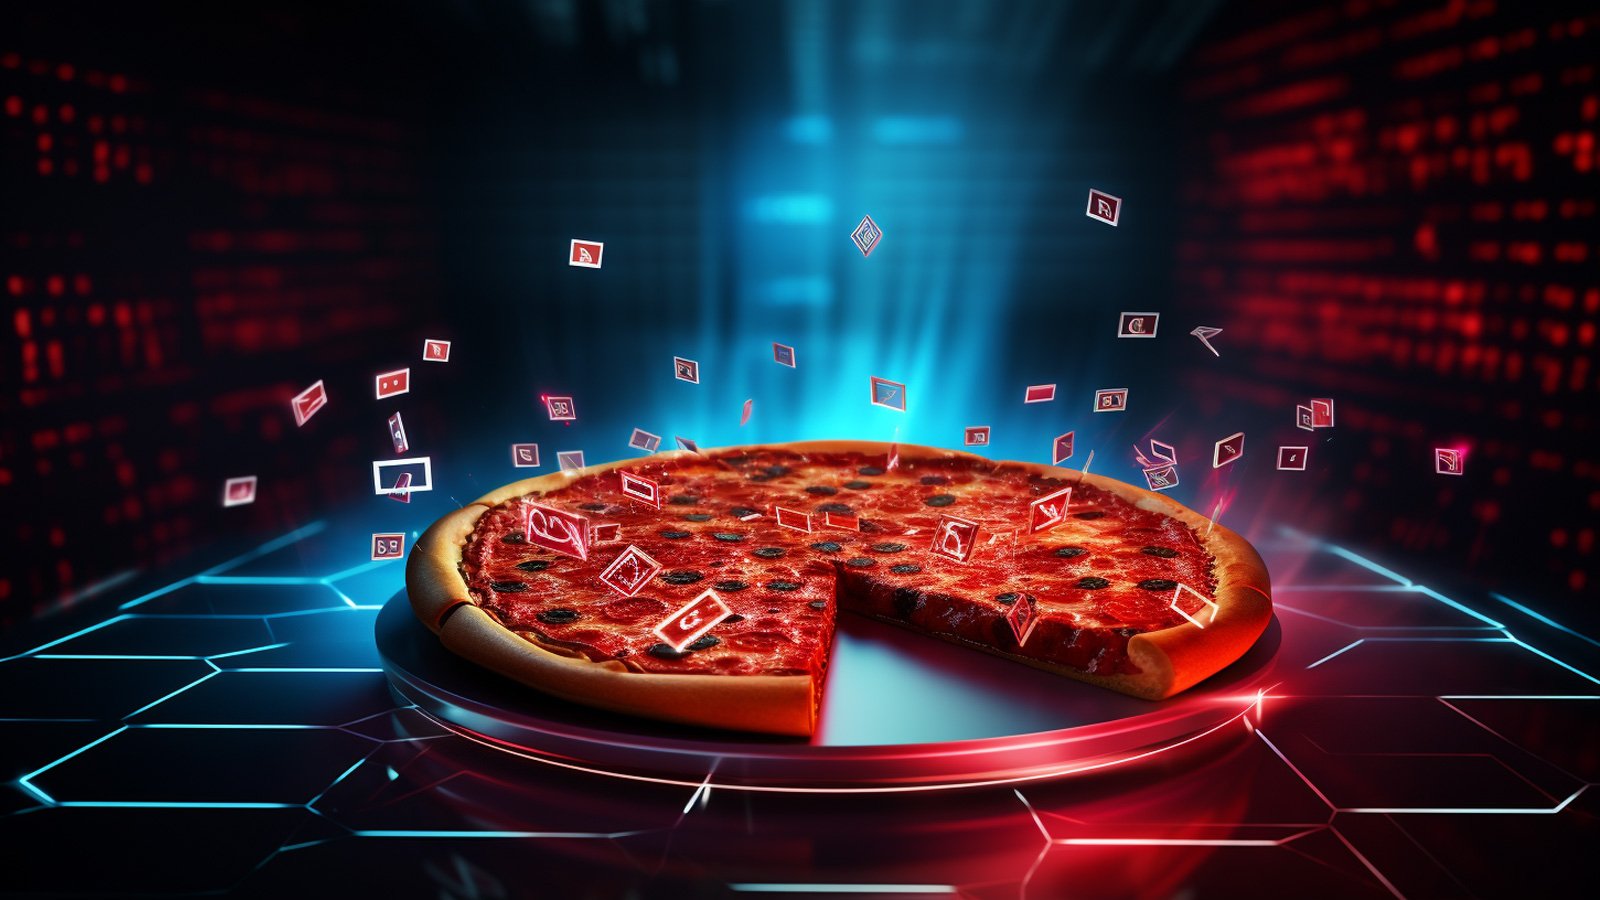 Pizza Hut Australia warns 193,000 customers of a data breach